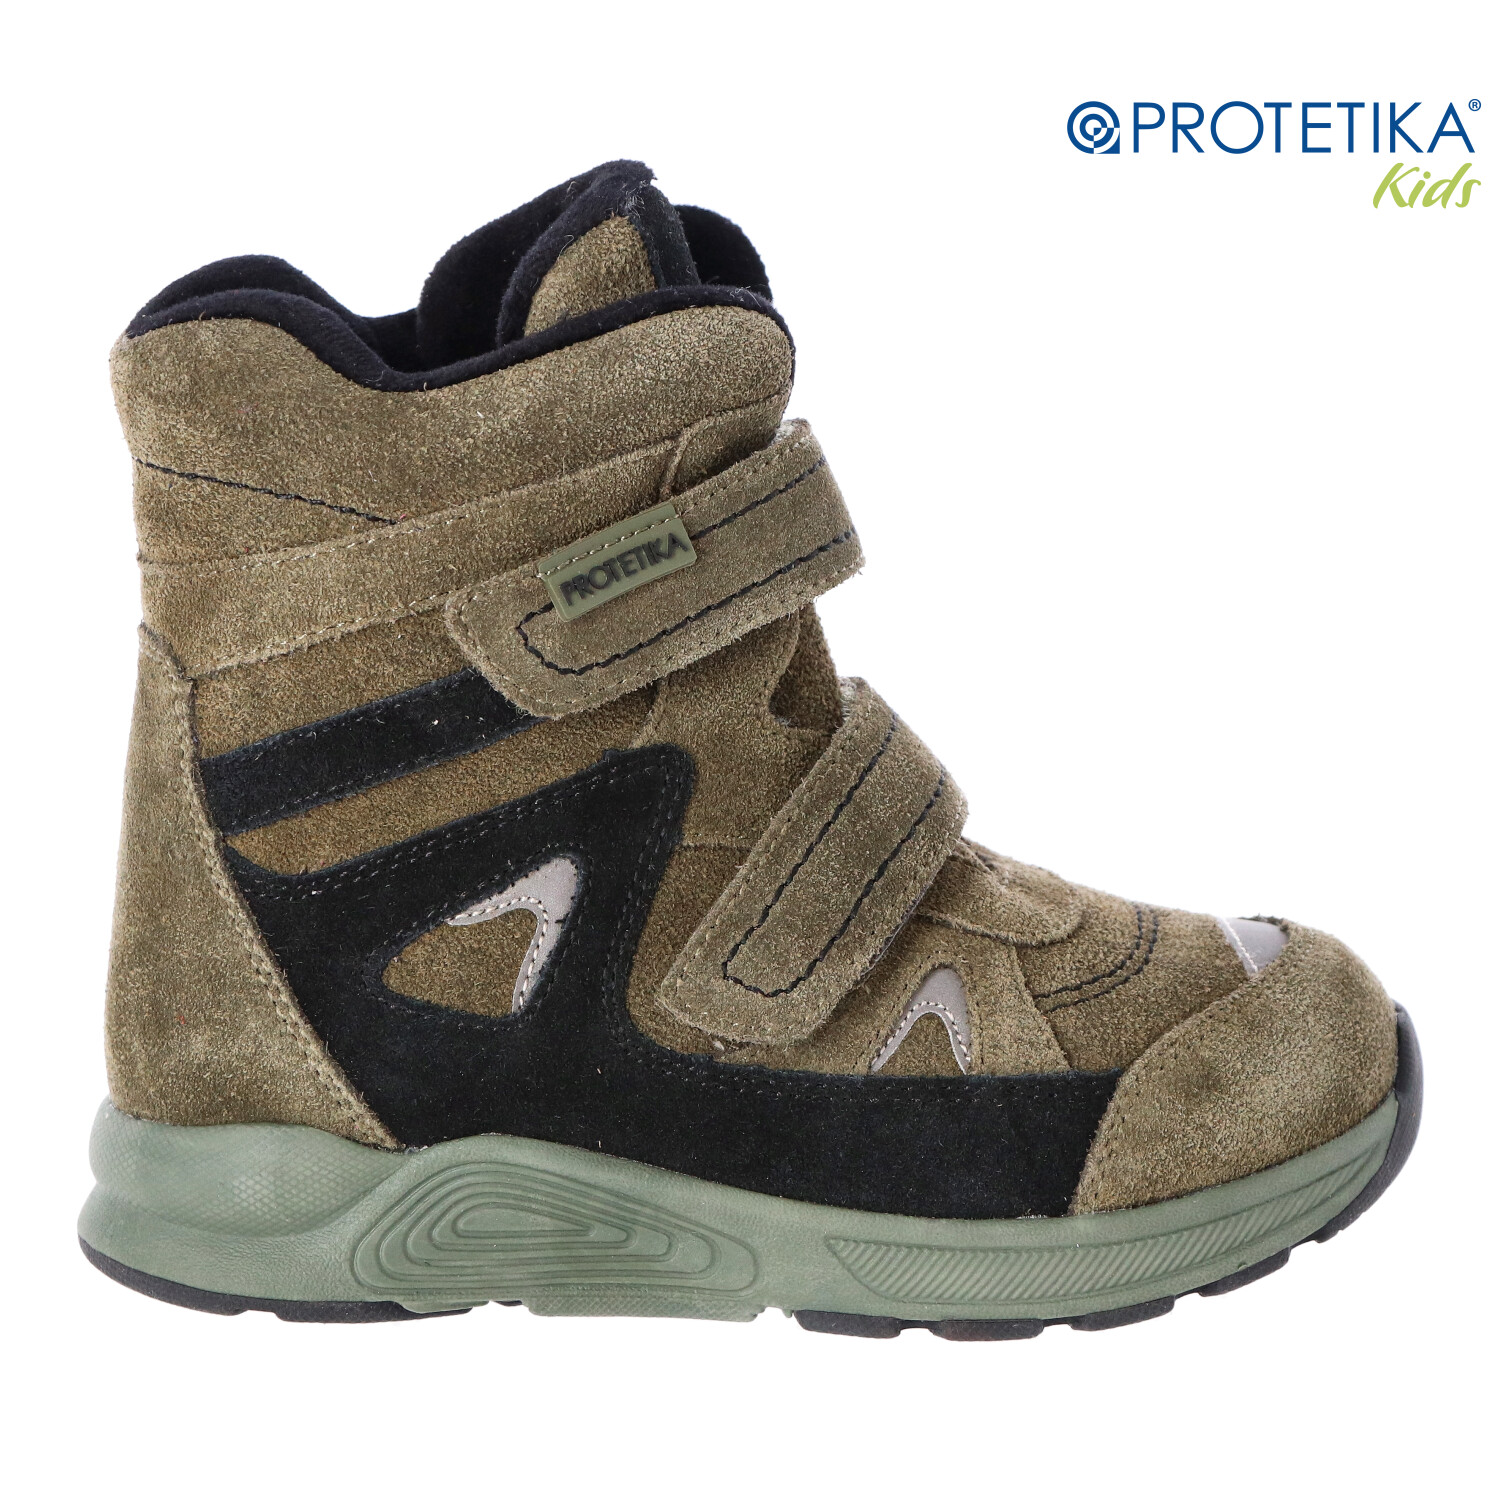 Protetika - zimné topánky s membránou PRO-tex RAFAEL khaki - zateplené